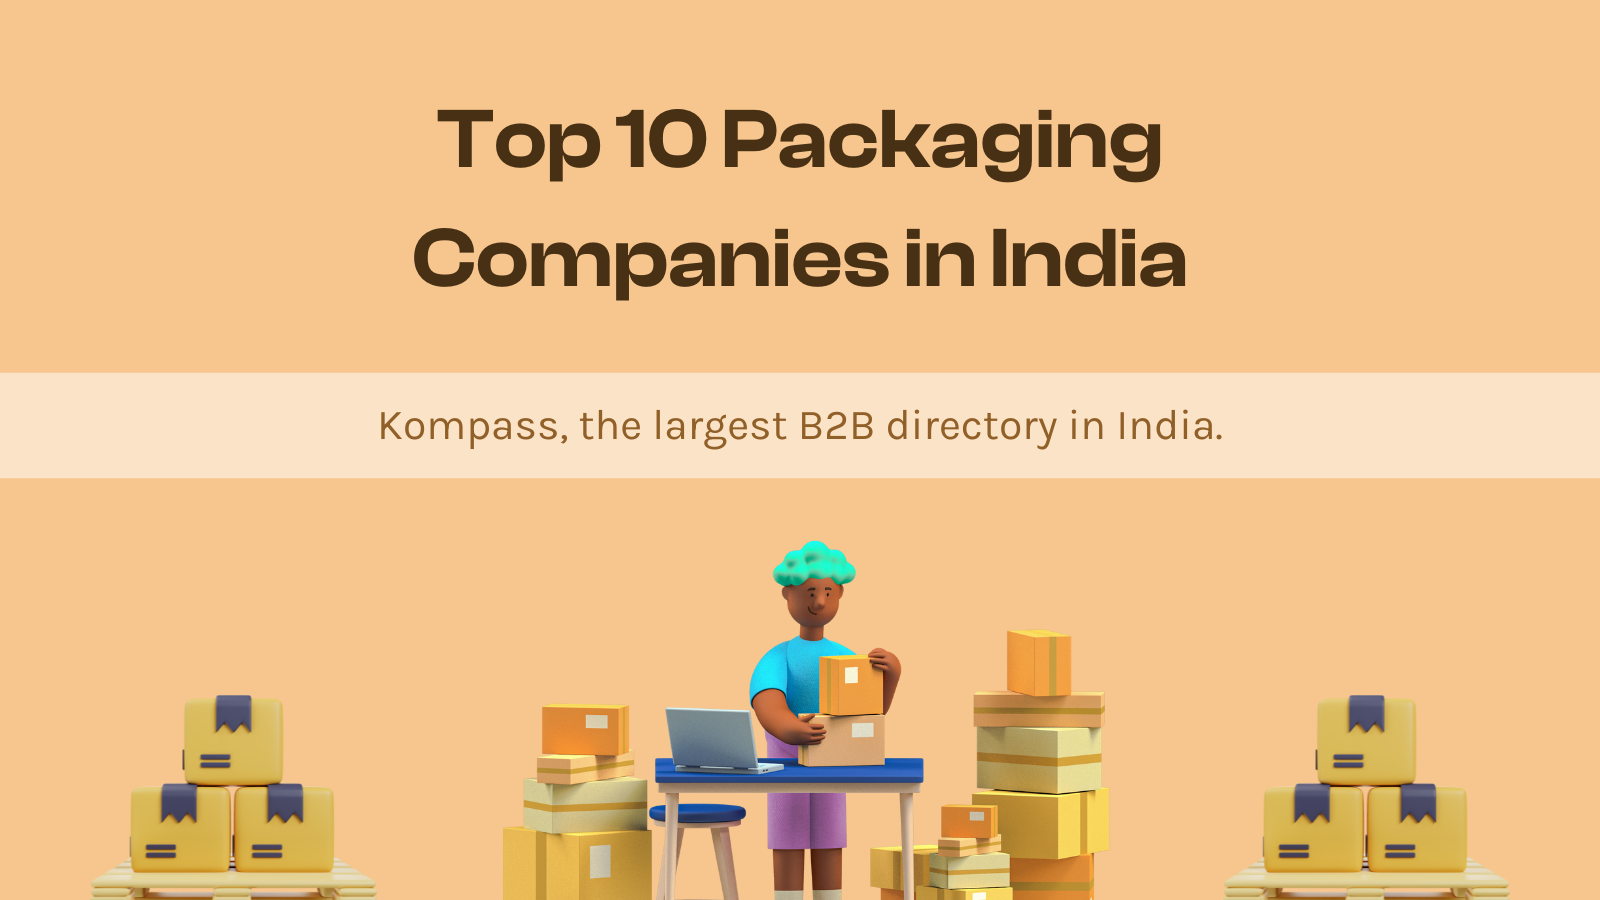 Top 10 Packaging Companies in India